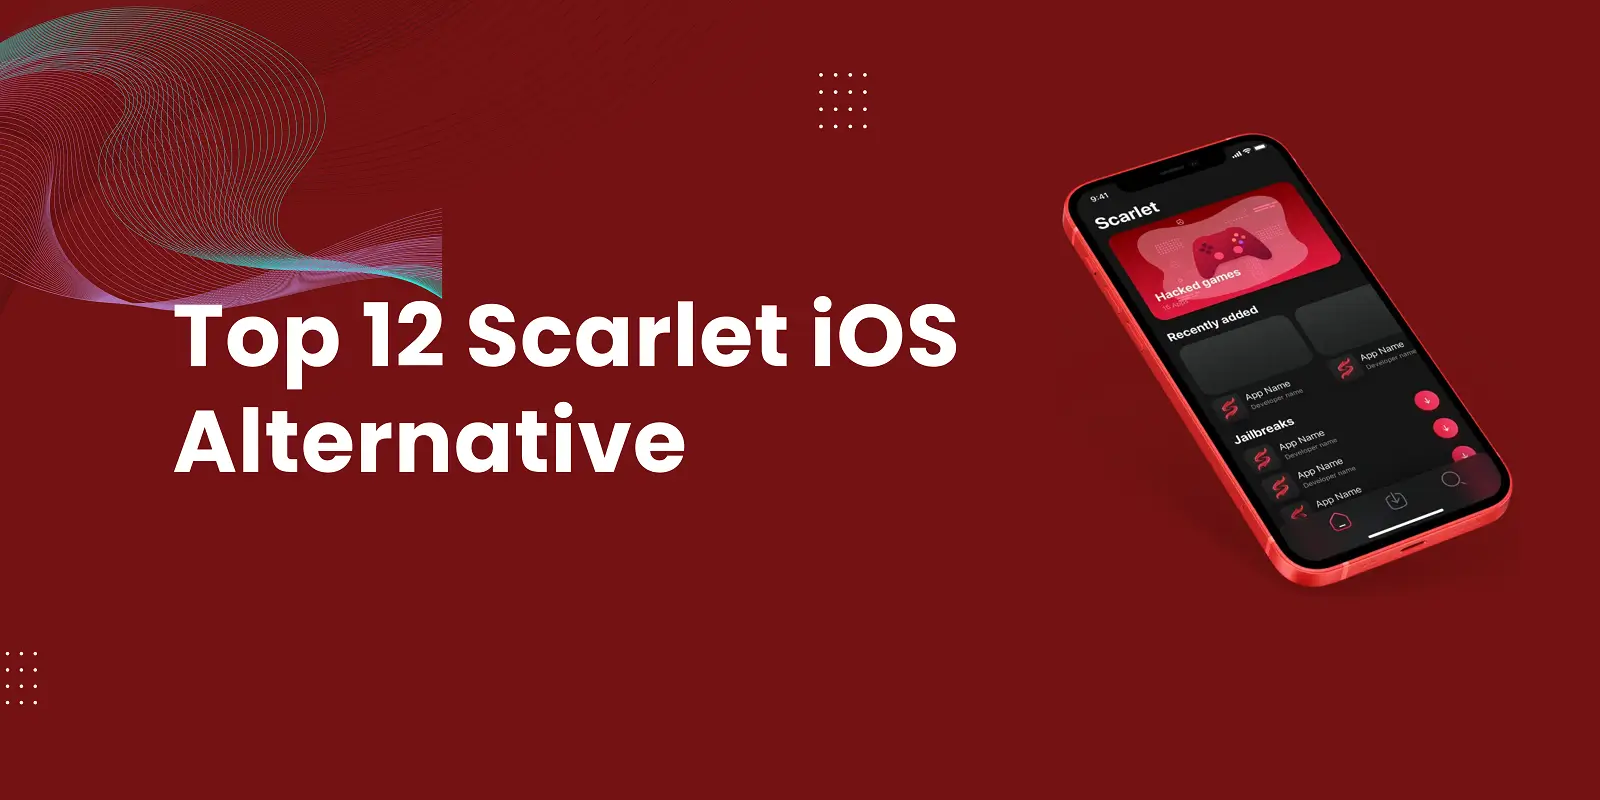 Top 12 Scarlet iOS Alternatives